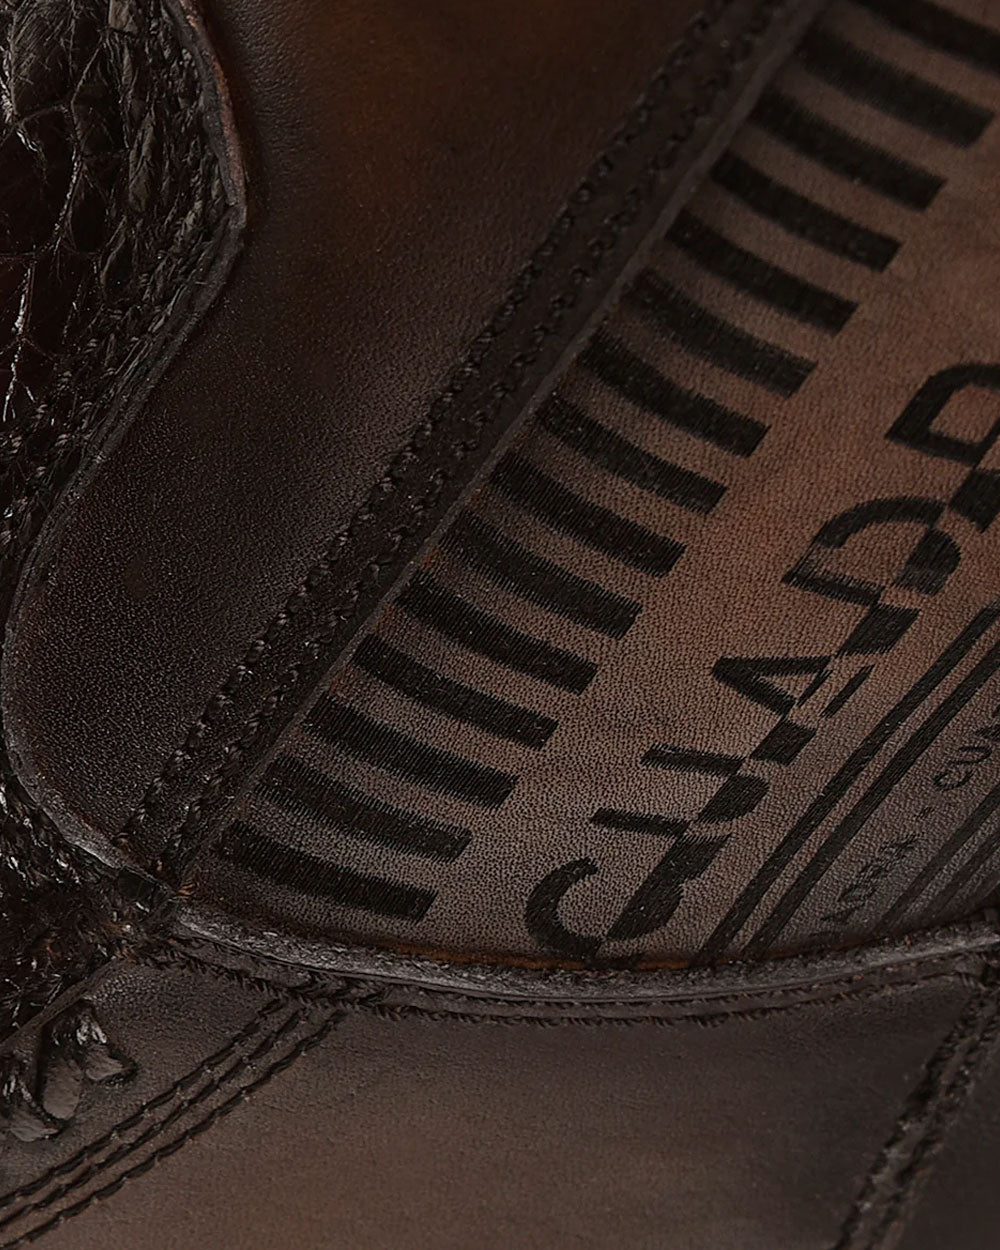 Laser Engraved Logo: Detailed craftsmanship on Cuadra's traditional boots. 